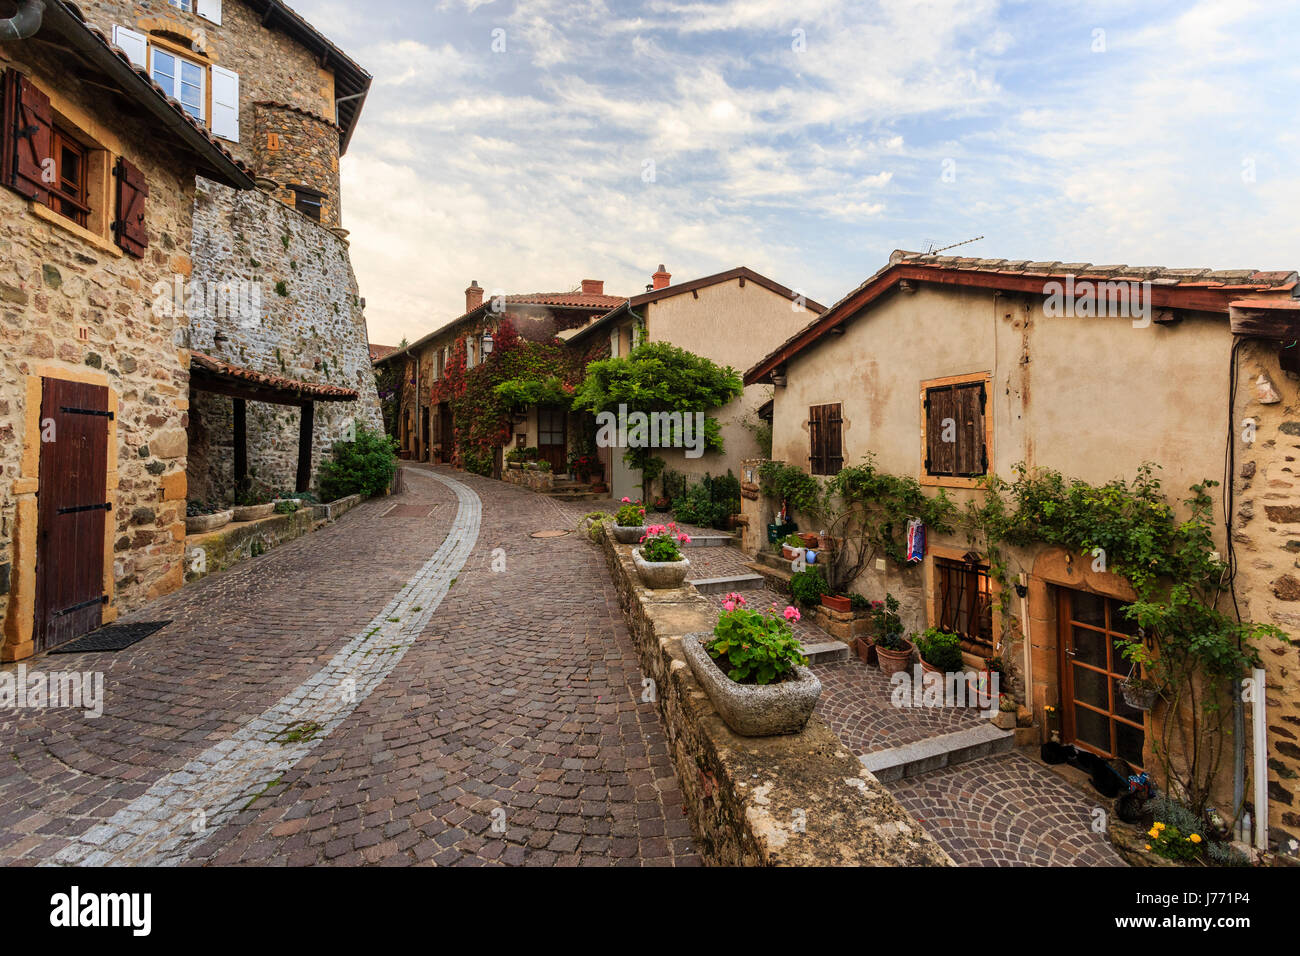 France, Rhone, Beaujolais region, Ternand, in the village Stock Photo